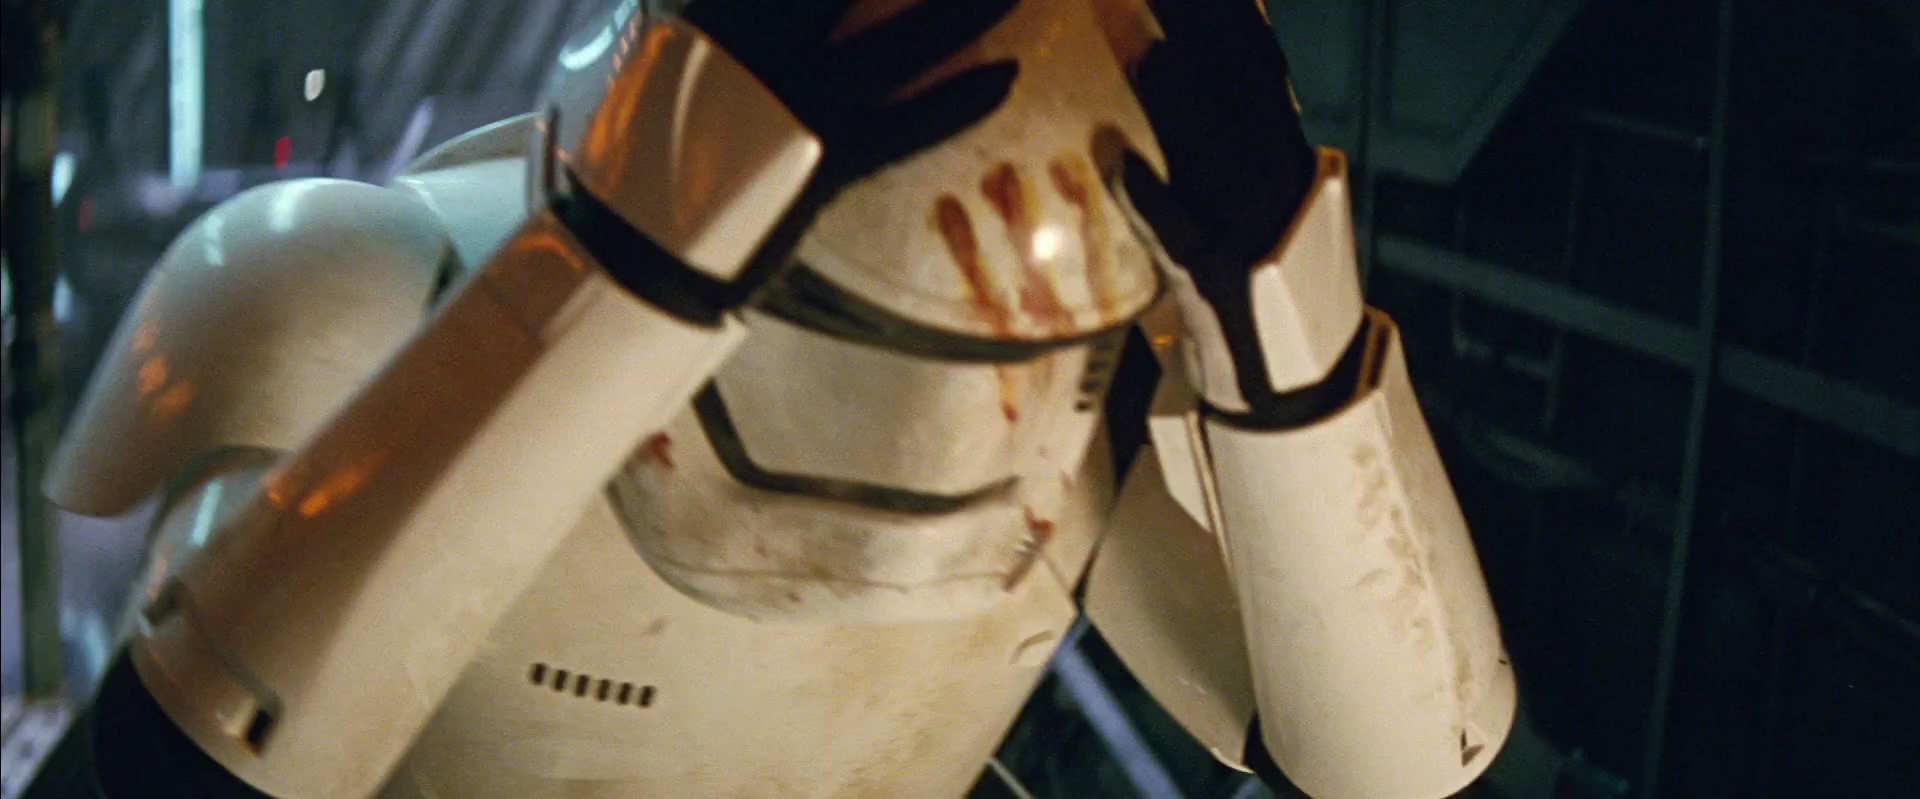 star-wars-the-force-awakens-official-teaser-trailer-2-stormtrooper-finn-with-blood-milnersblog